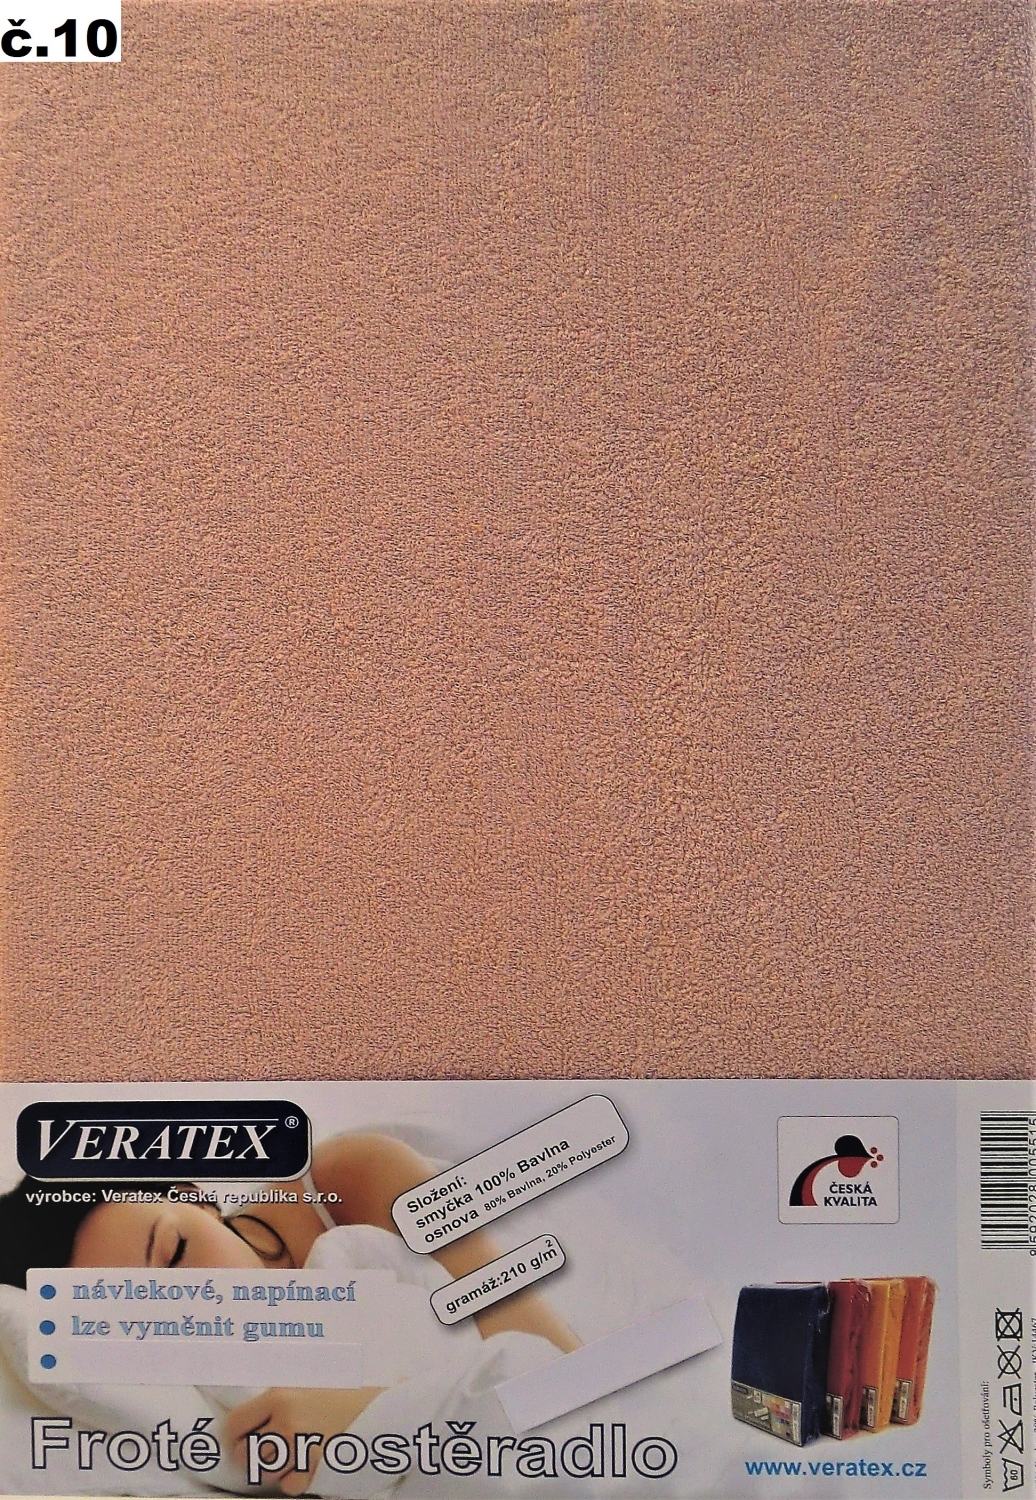 Veratex Froté prostěradlo 100x220/16 cm (č.10-starorůžová)